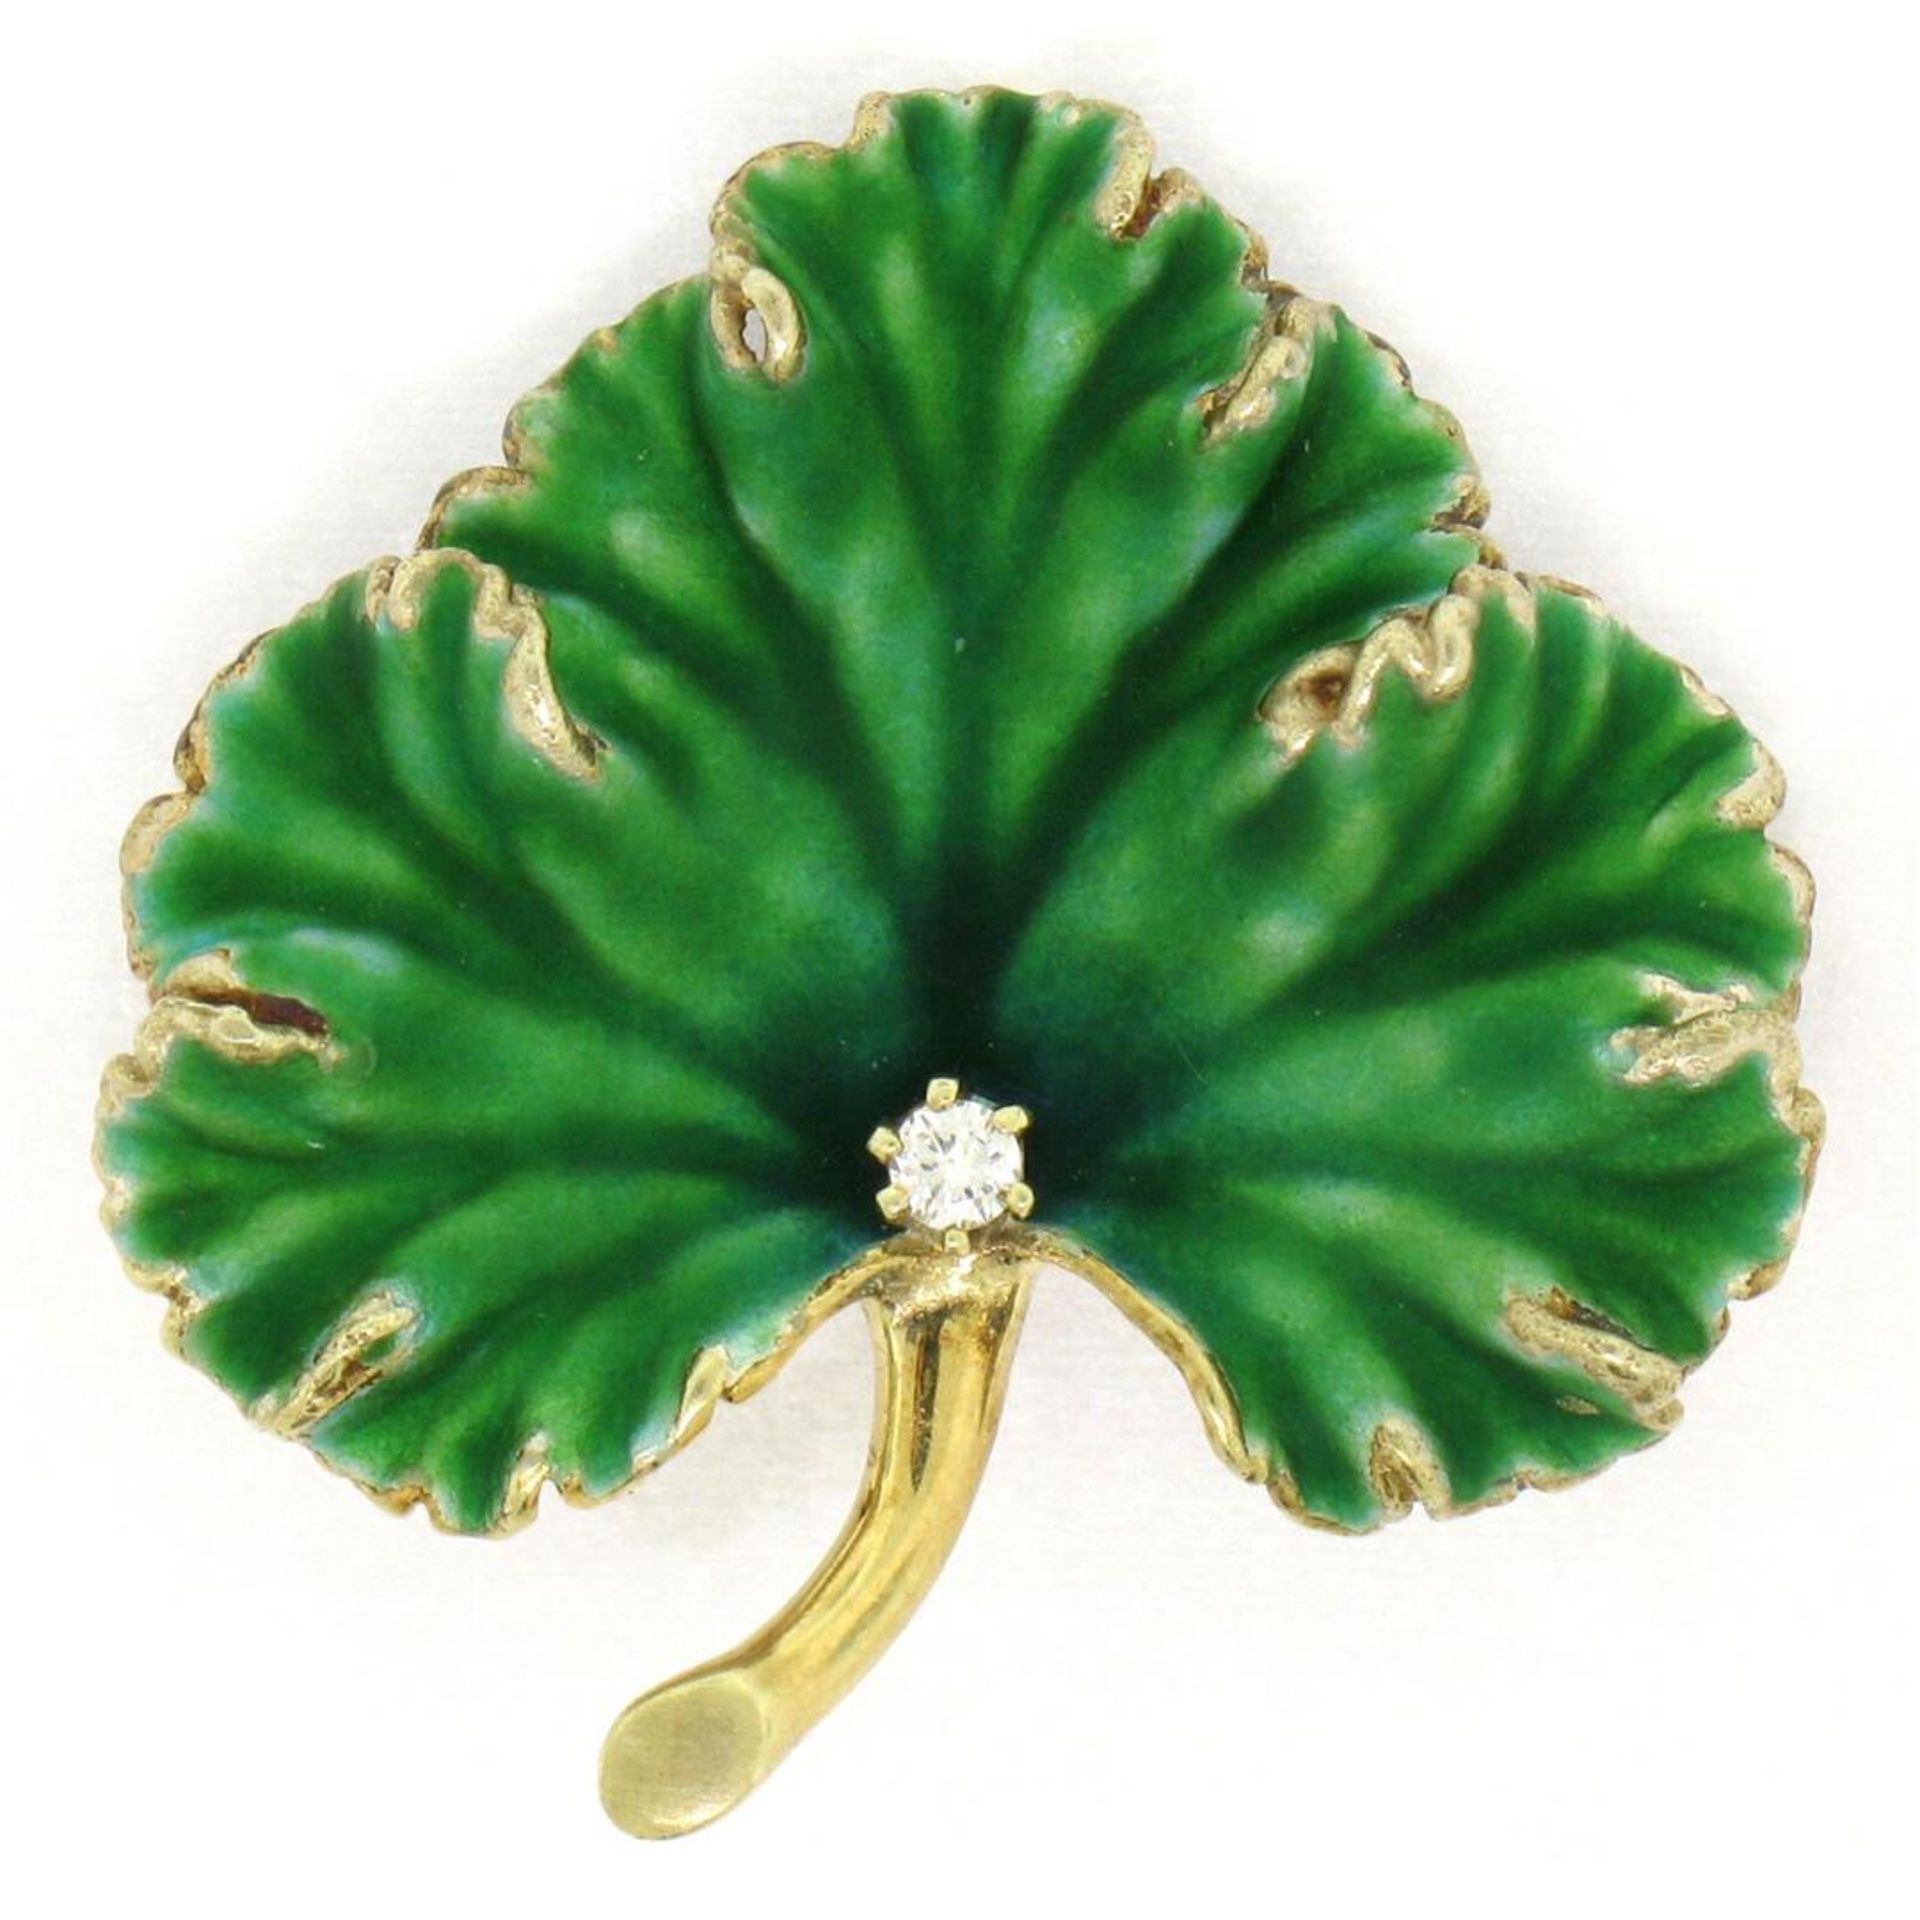 Unique Omega Vintage 14K Yellow Gold Green Enamel & Diamond Detailed Leaf Brooch - Image 3 of 8